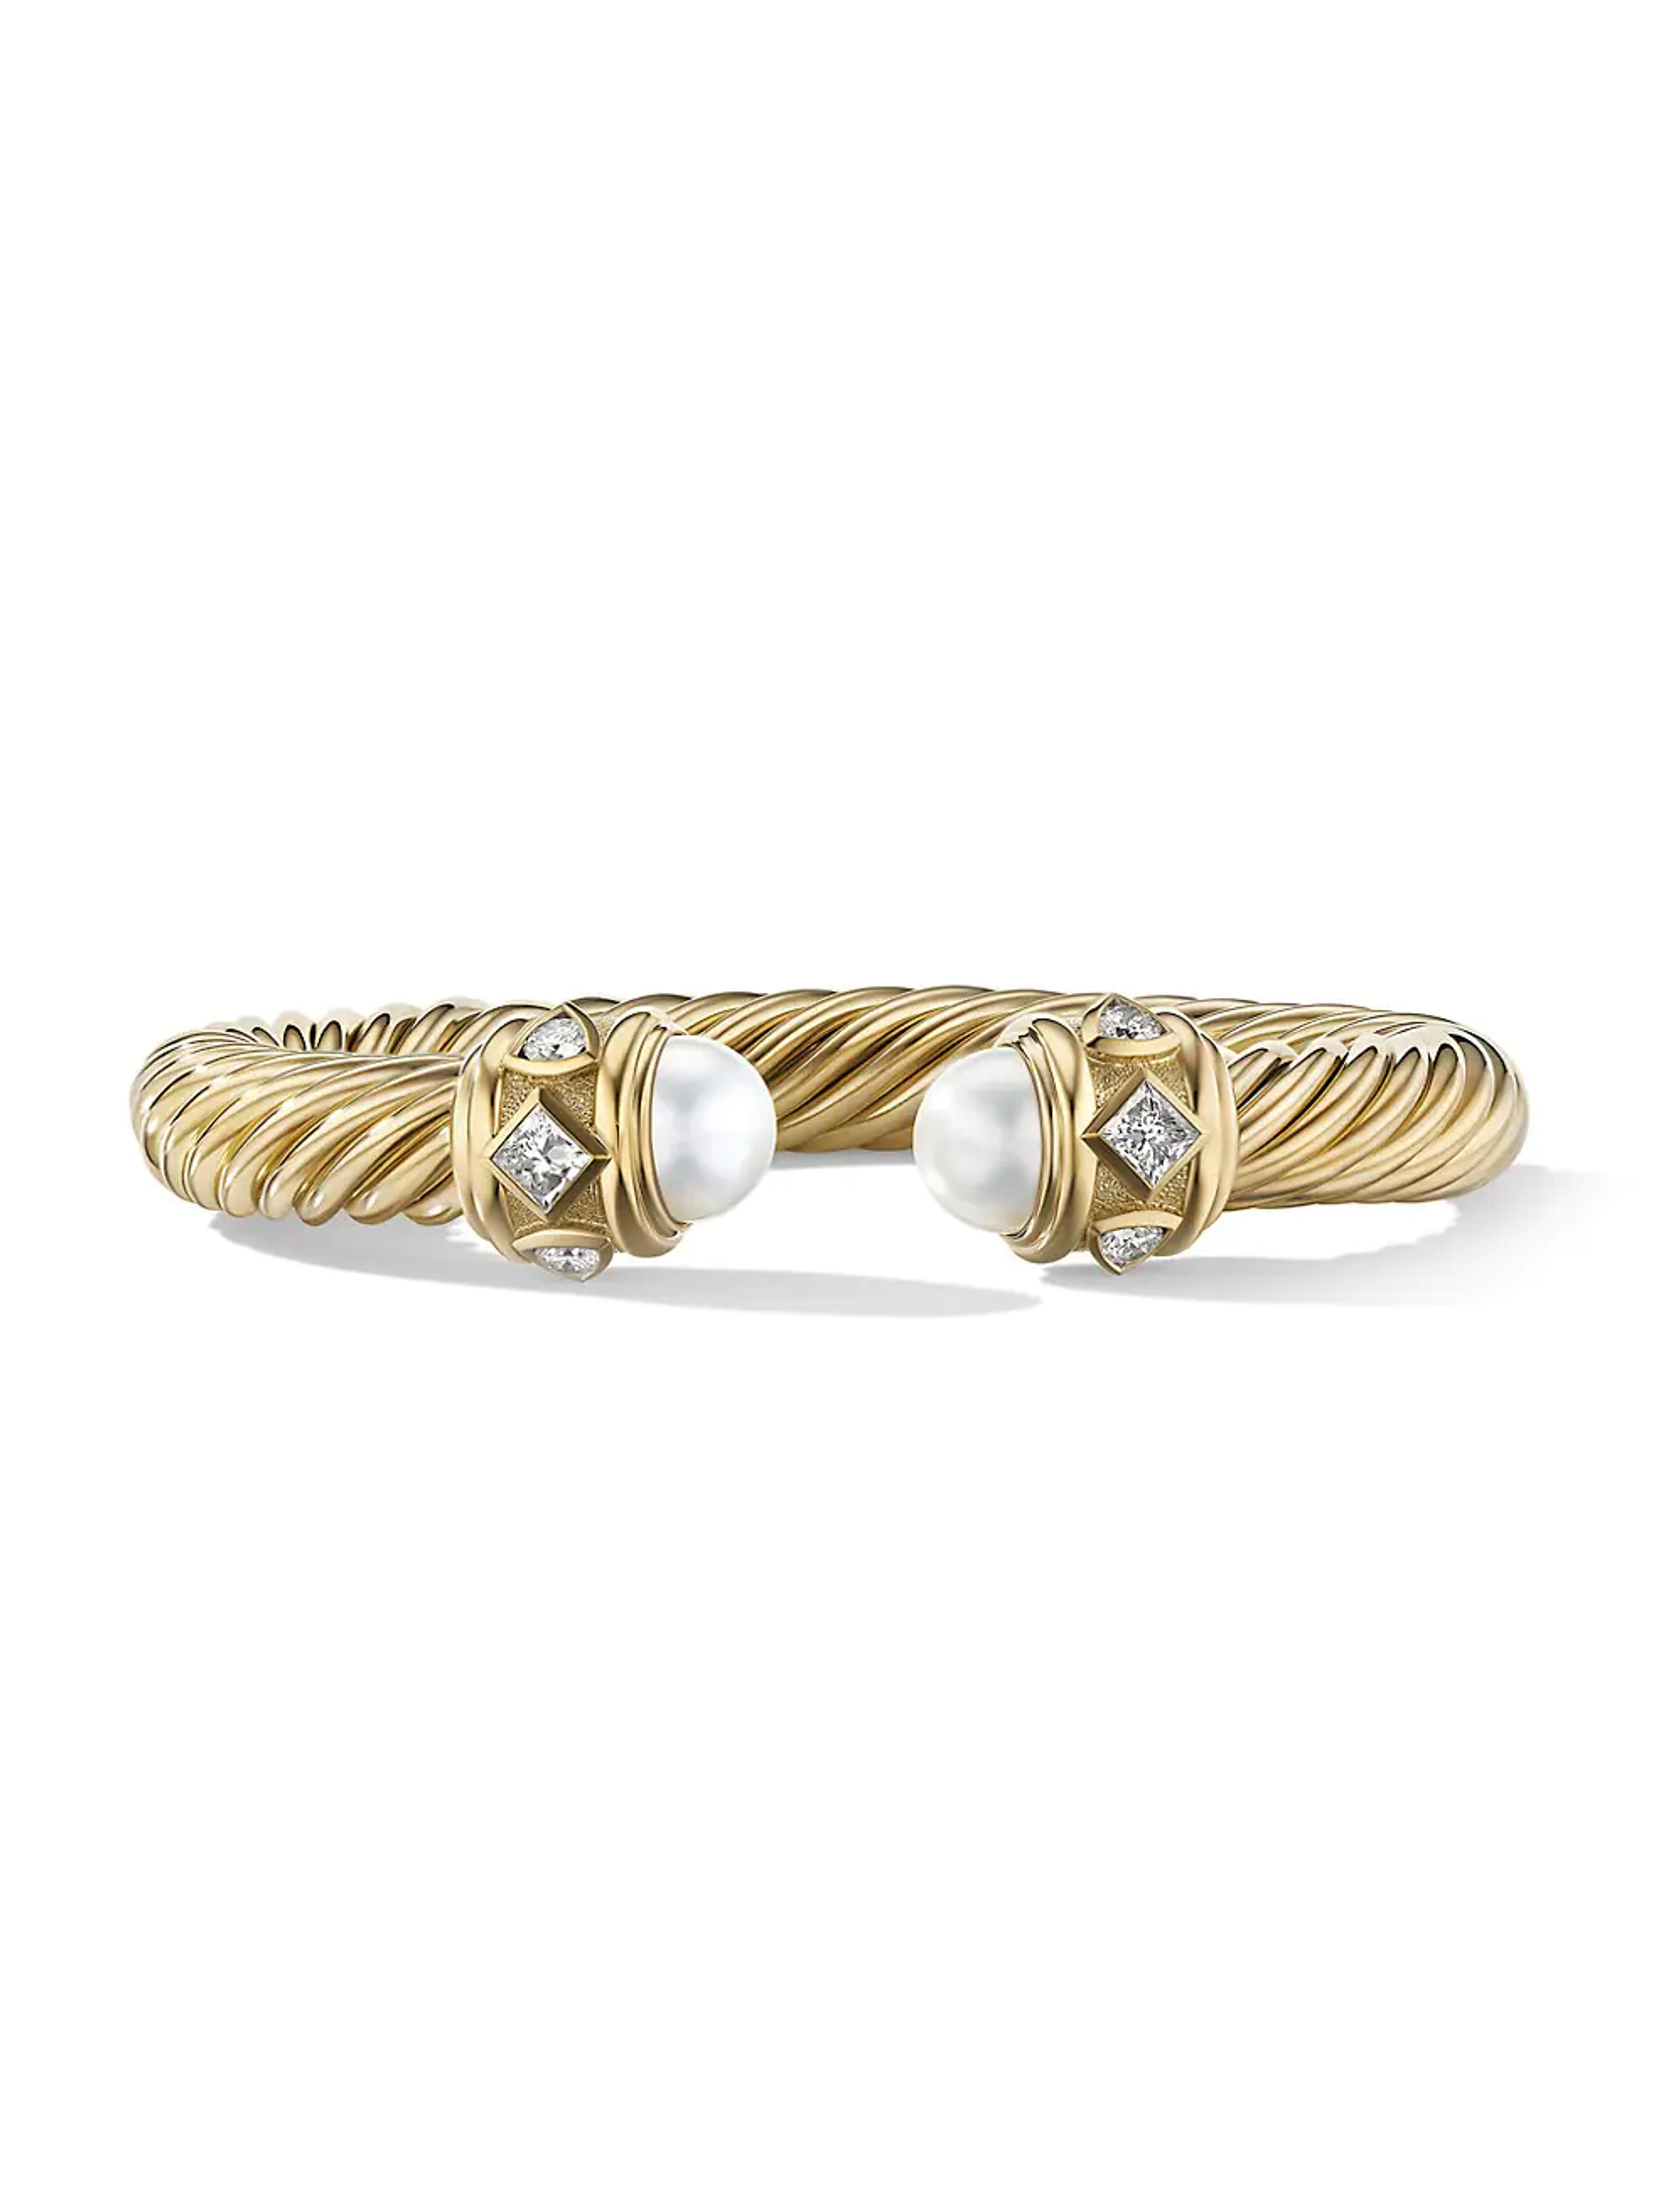 Shop David Yurman Renaissance Bracelet In 18K Yellow Gold With Pearls & Pavé Diamonds | Saks Fifth Avenue